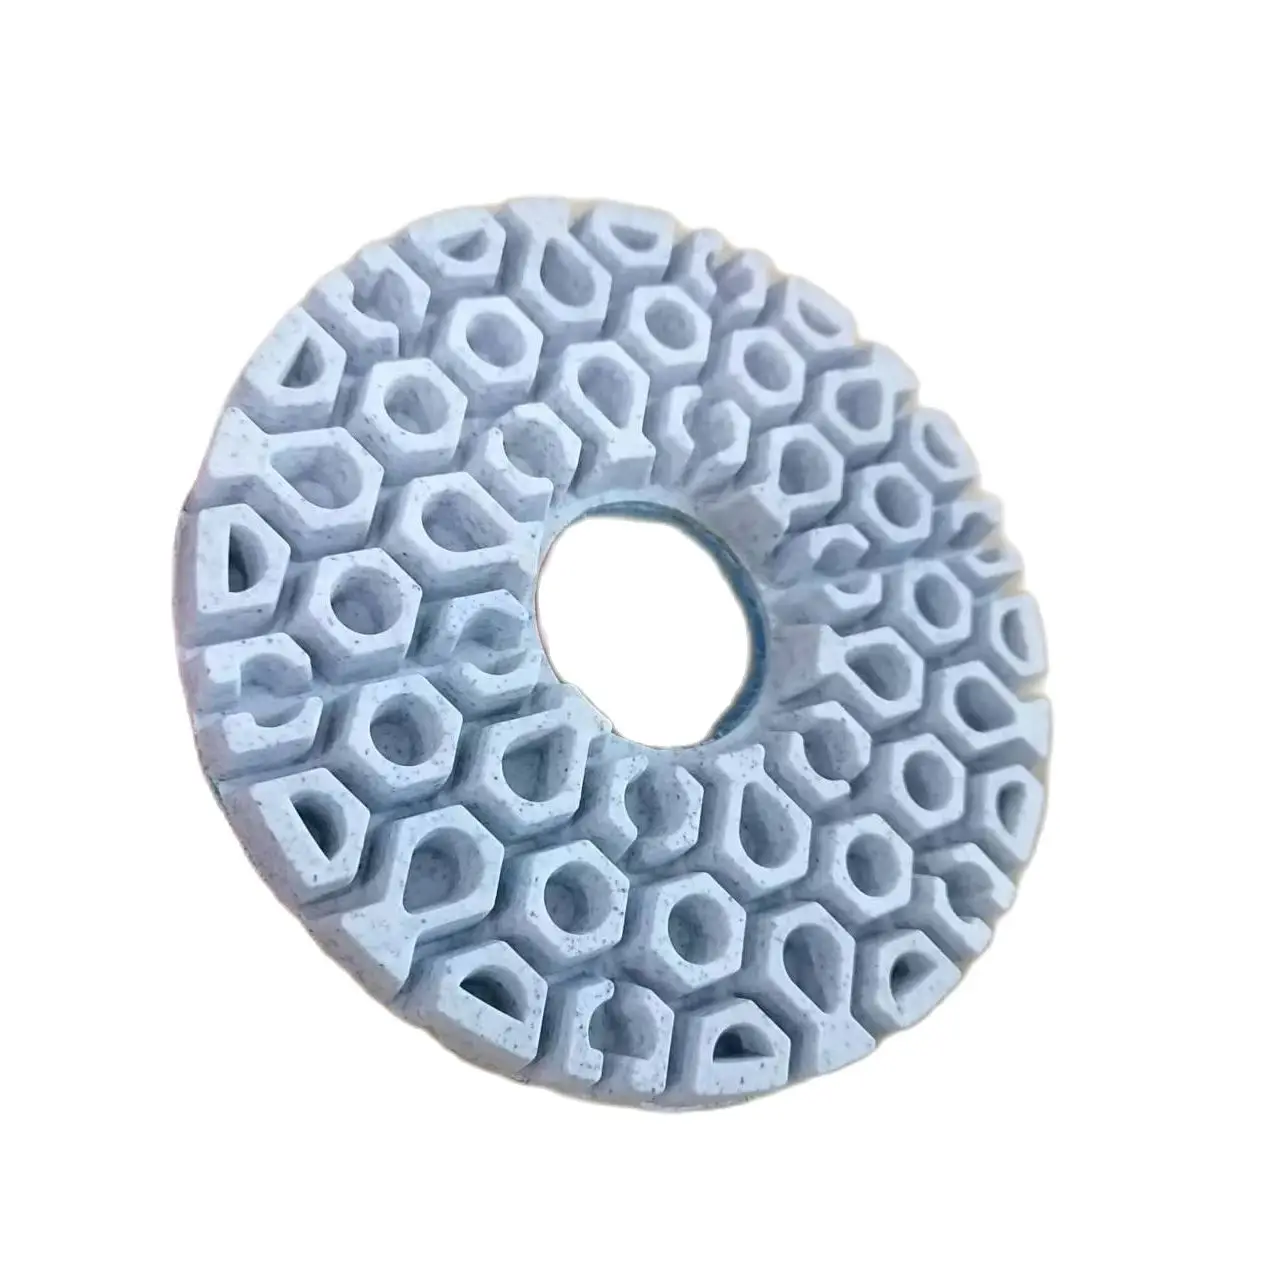 150mm 6inch Thicken Abrasive Diamond Wet Polishing Pad Polish Disc For Stone Marble Granite Quartz Grinding And Floor Renovation